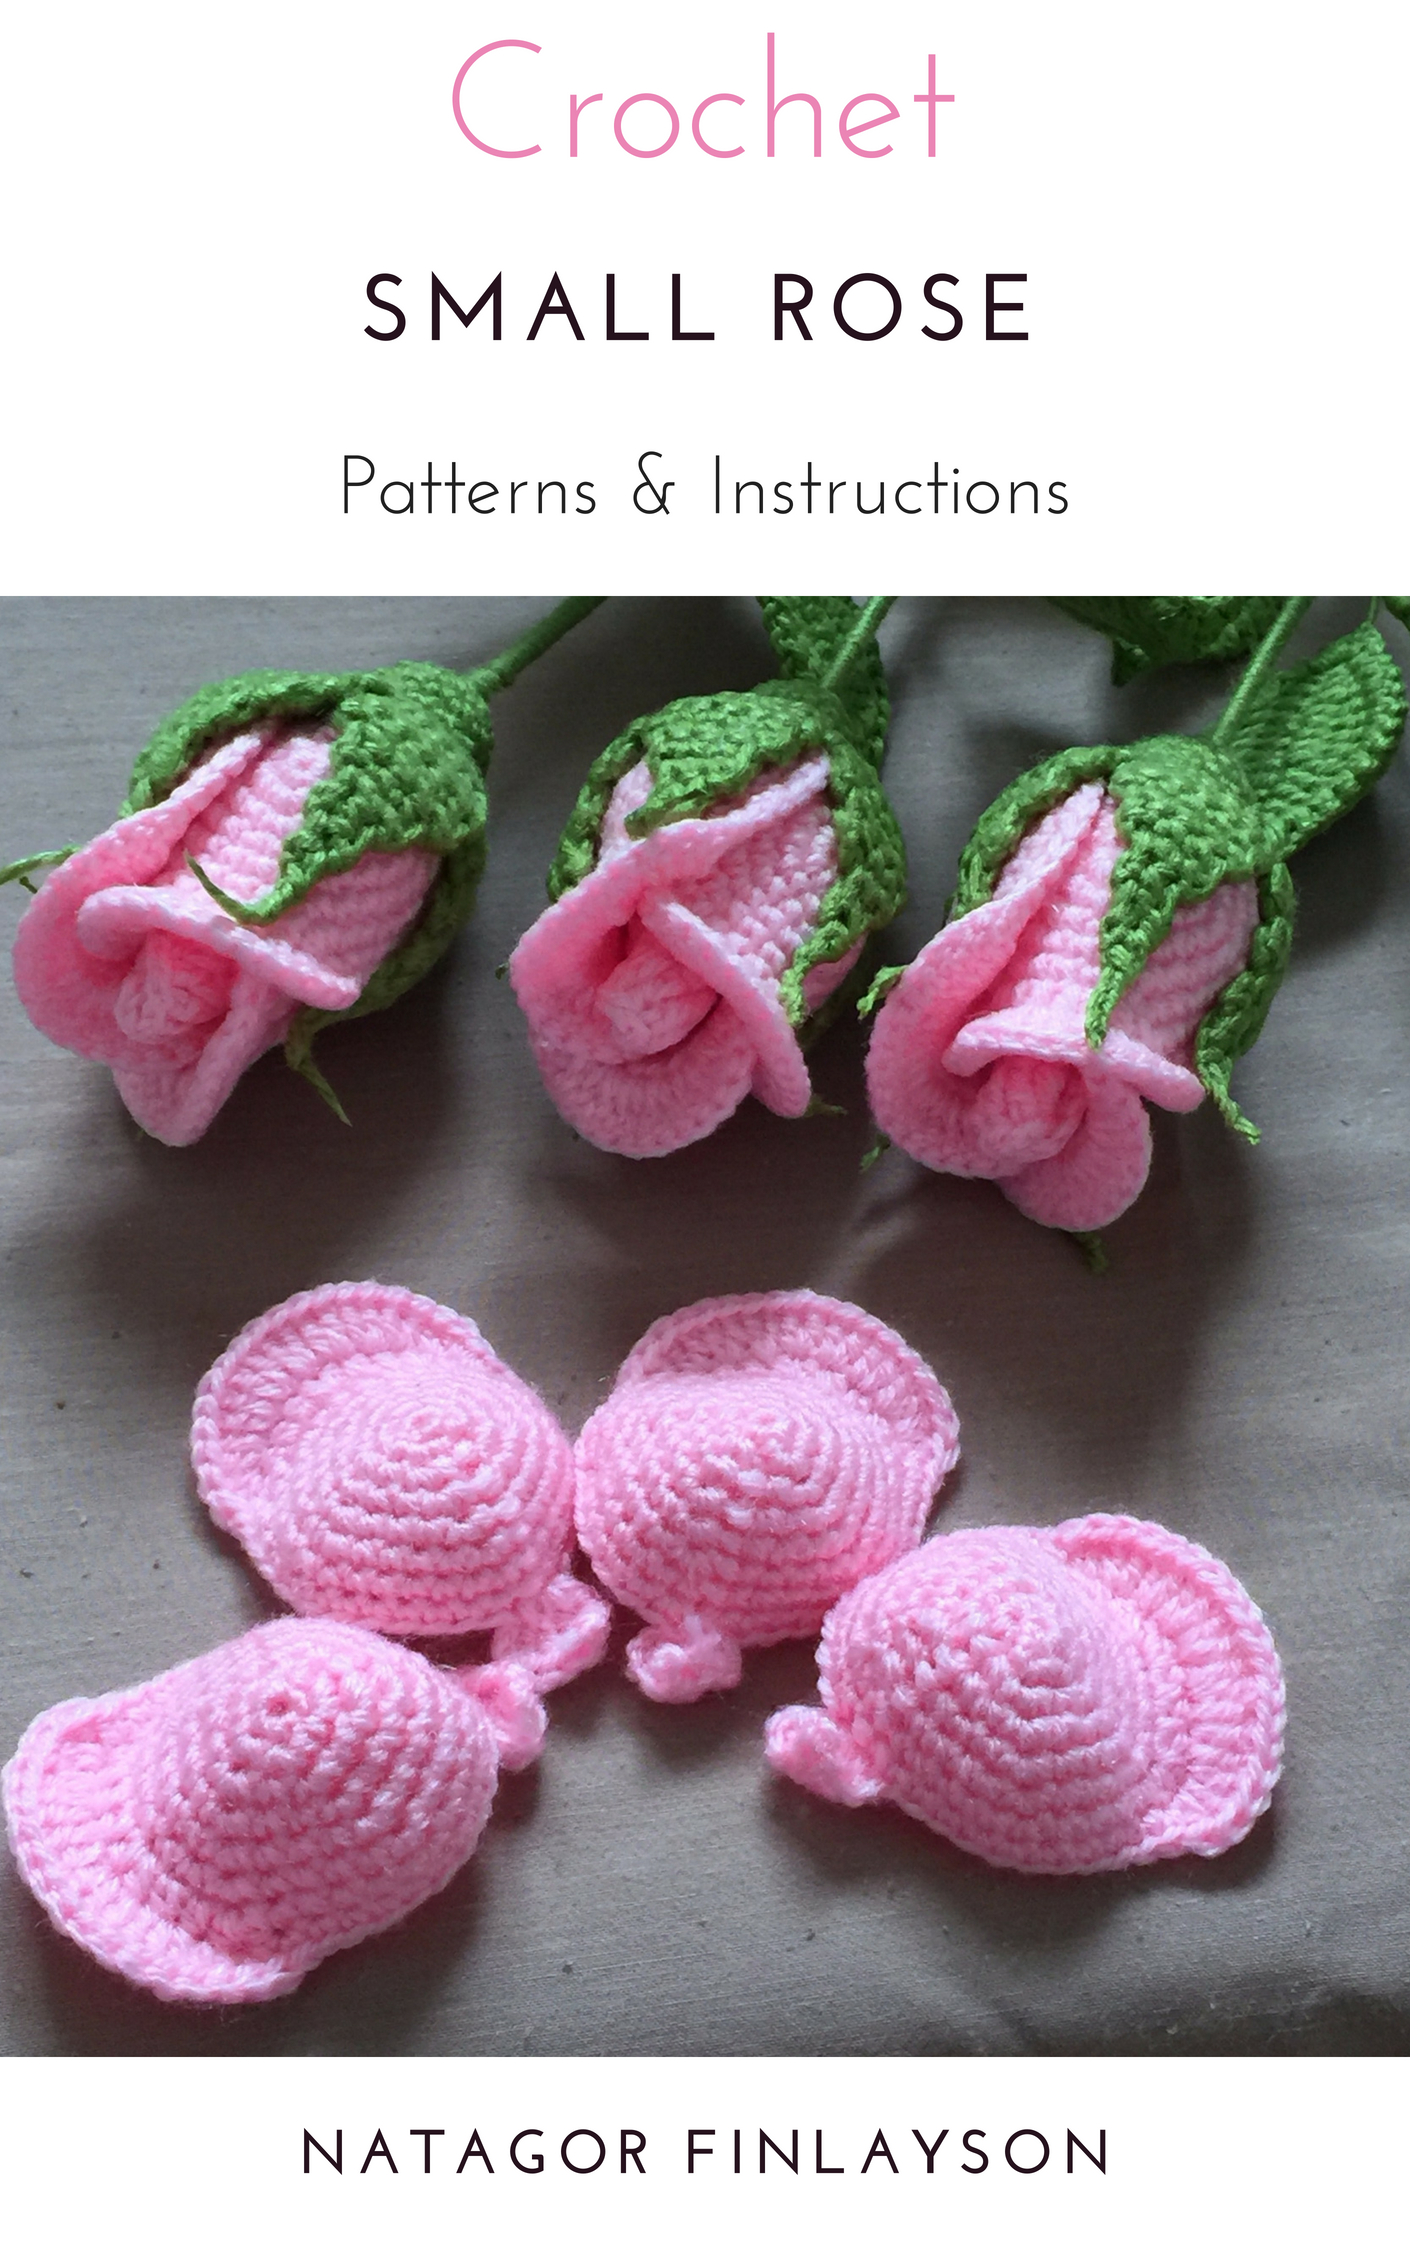 Small Crochet Flower Pattern Crochet Small Rose Pattern Natagor Finlayson